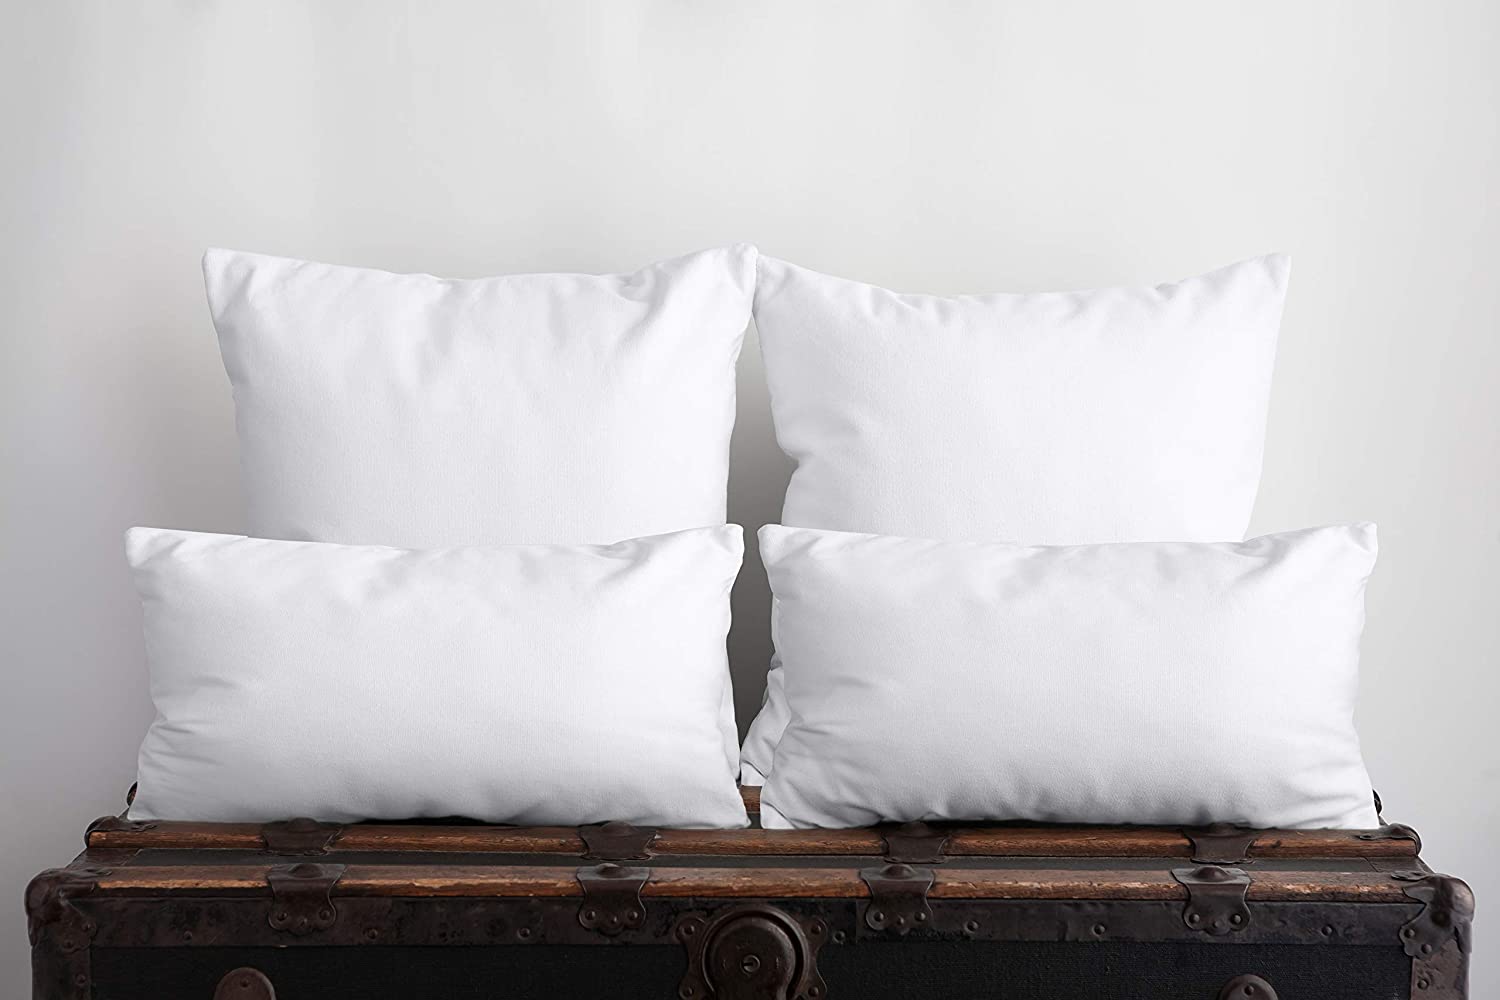 Utopia Bedding Throw Pillows Insert (Pack of 2, Orange) - 18 x 18